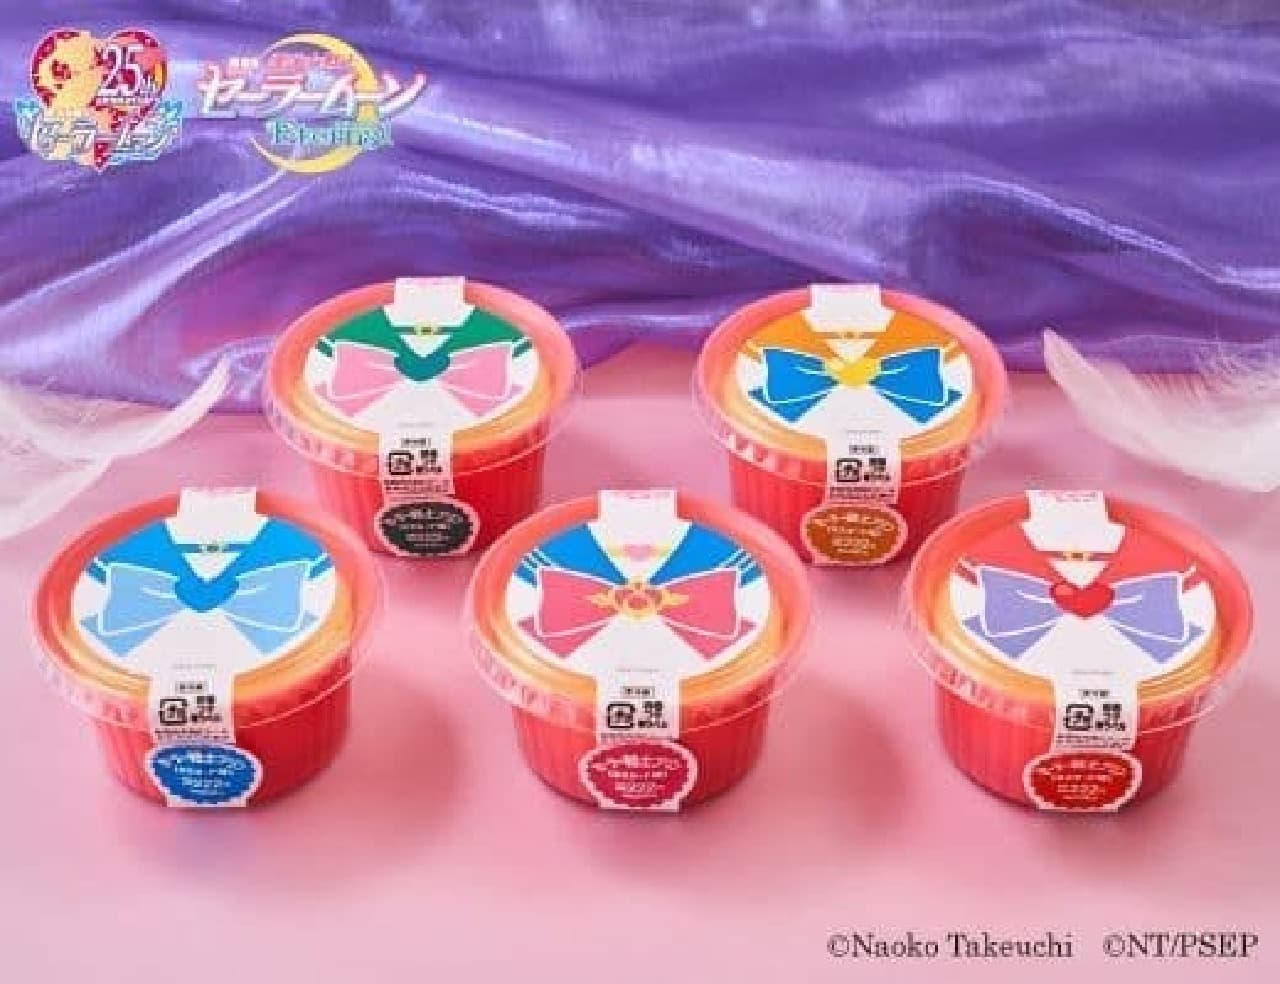 Movie version "Bishoujo Senshi Sailor Moon Eternal" Sailor Senshi Pudding (Custard flavor)